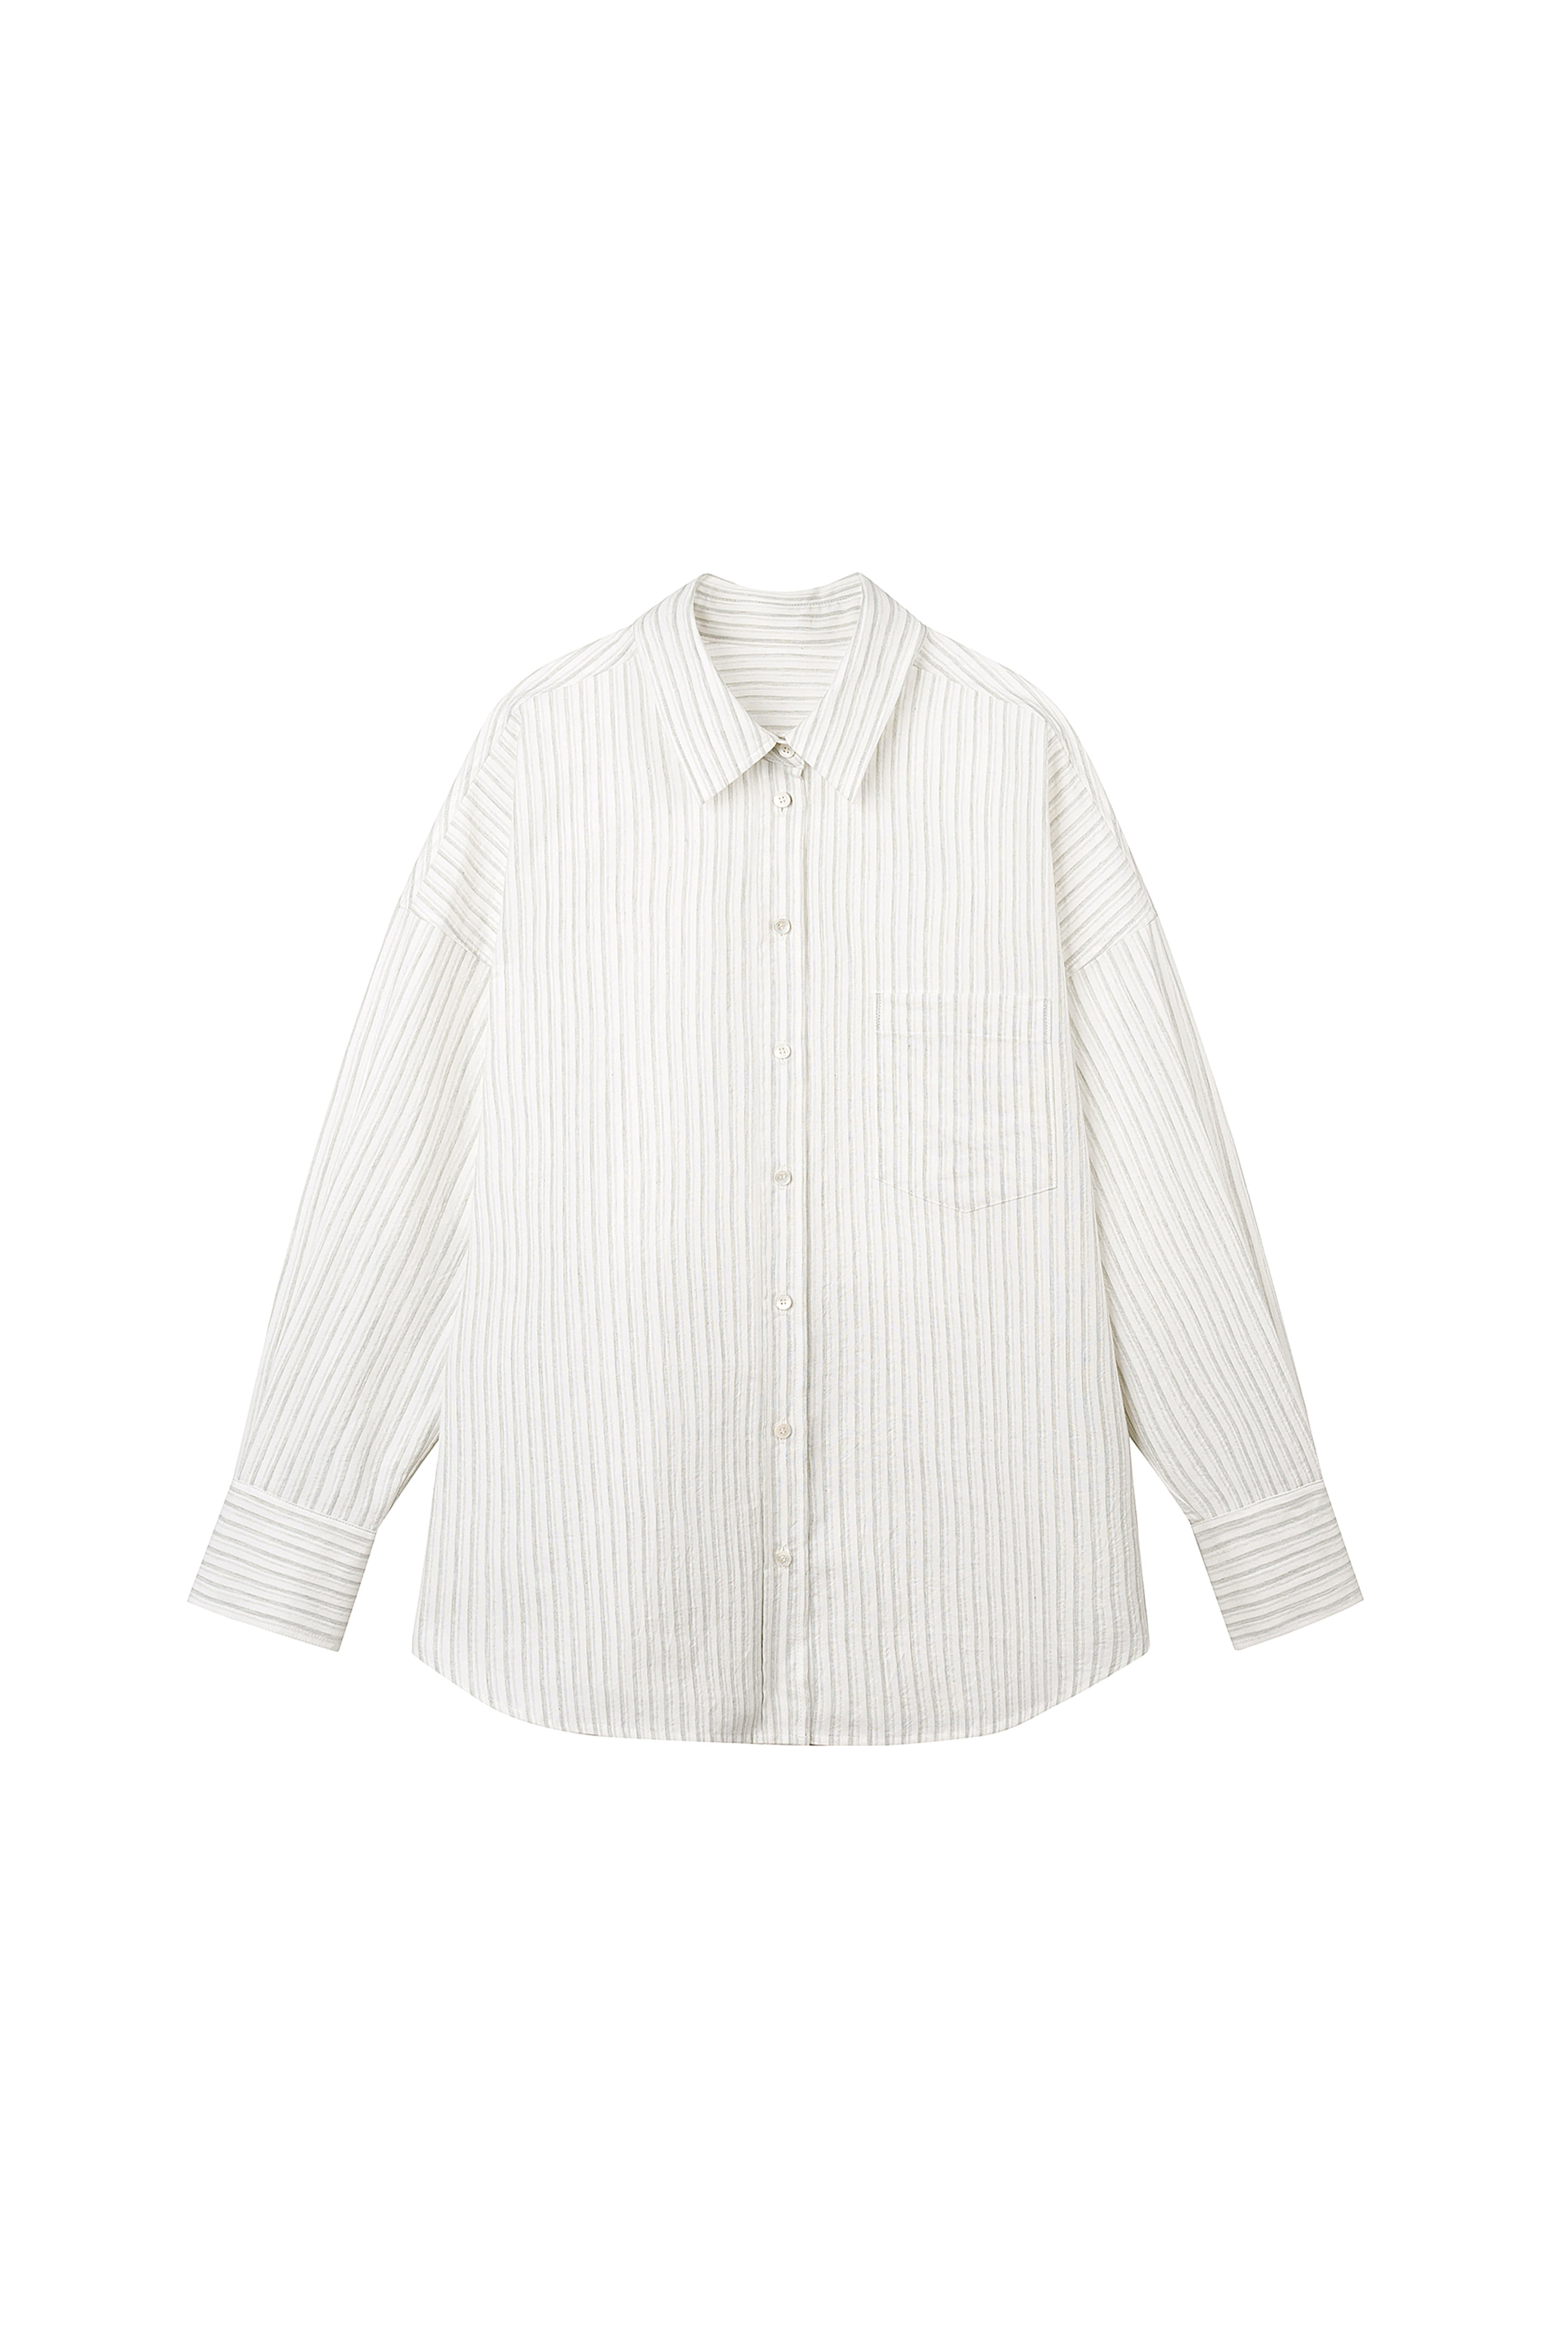 3rd) Cotton Shirts Stripe Over-sized Khaki